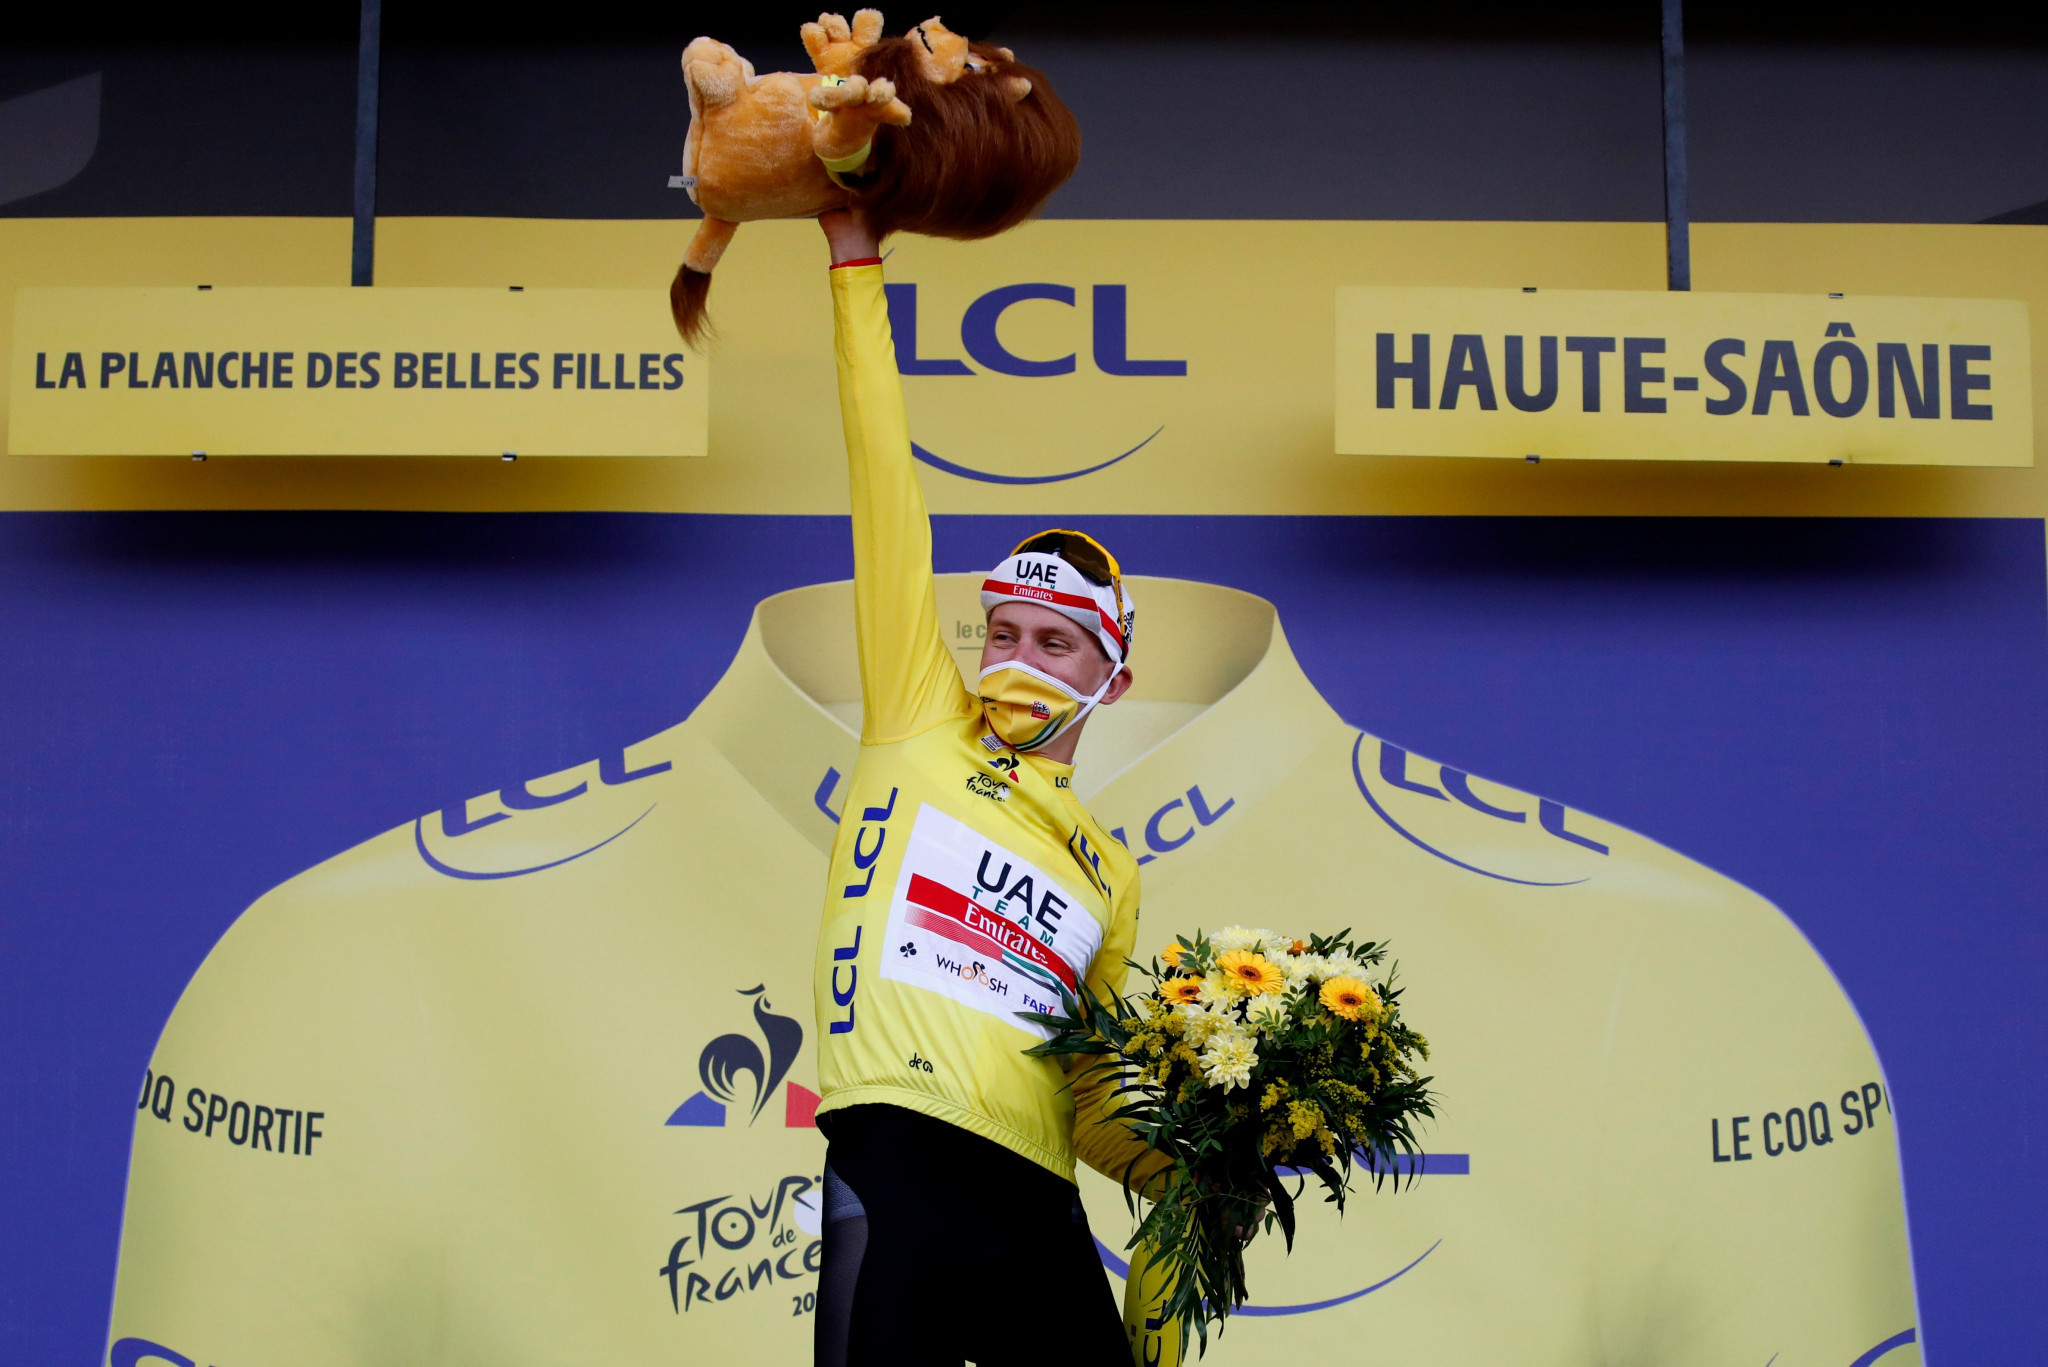 Pogačar to be crowned Tour de France winner